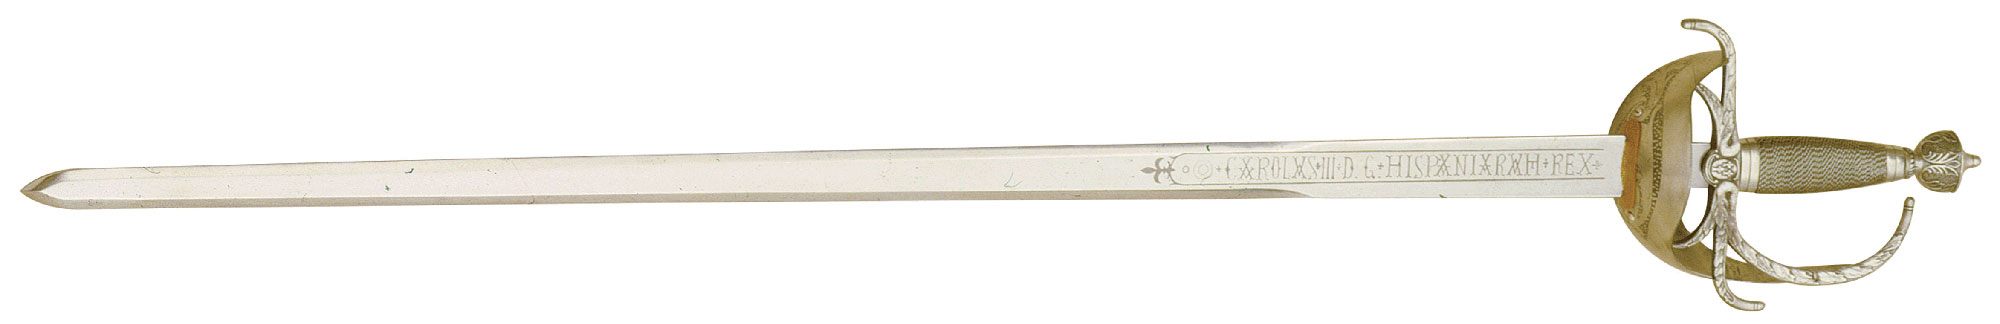 Charles III Sword